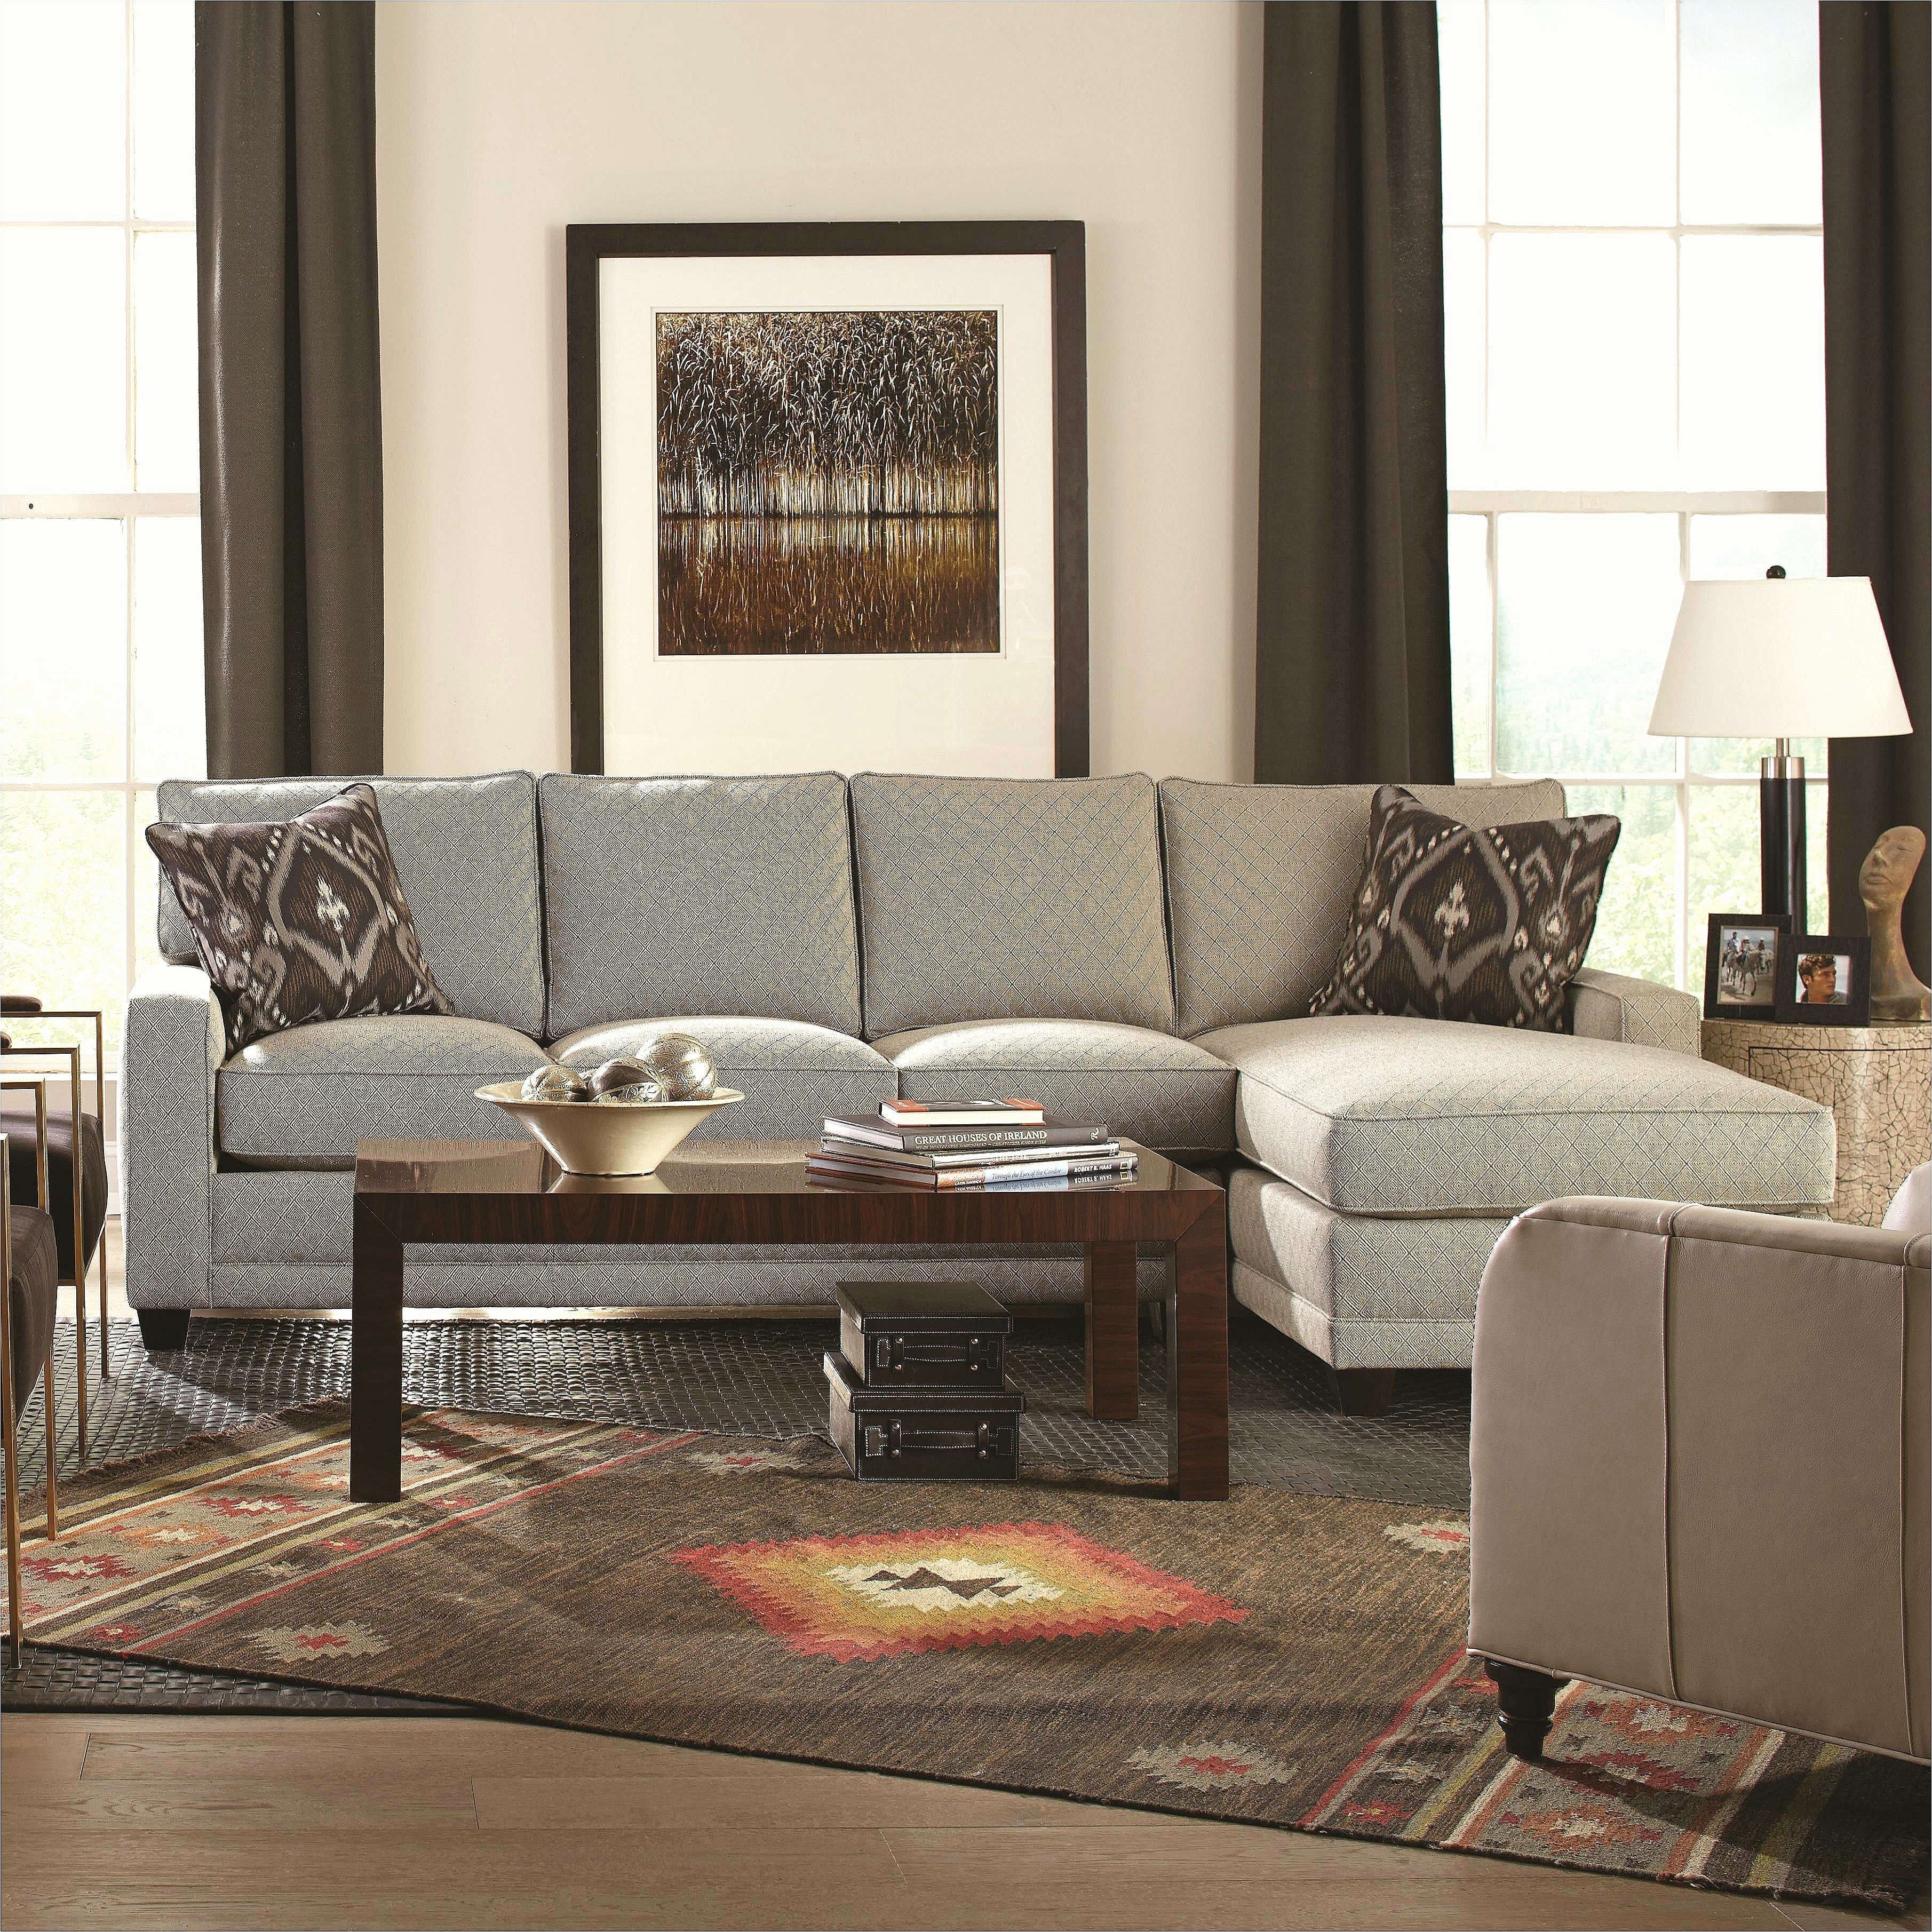 Outstanding Contemporary Living Room Tables Inspirationa Modern Living Room Furniture New Gunstige Sofa Macys Furniture 0d